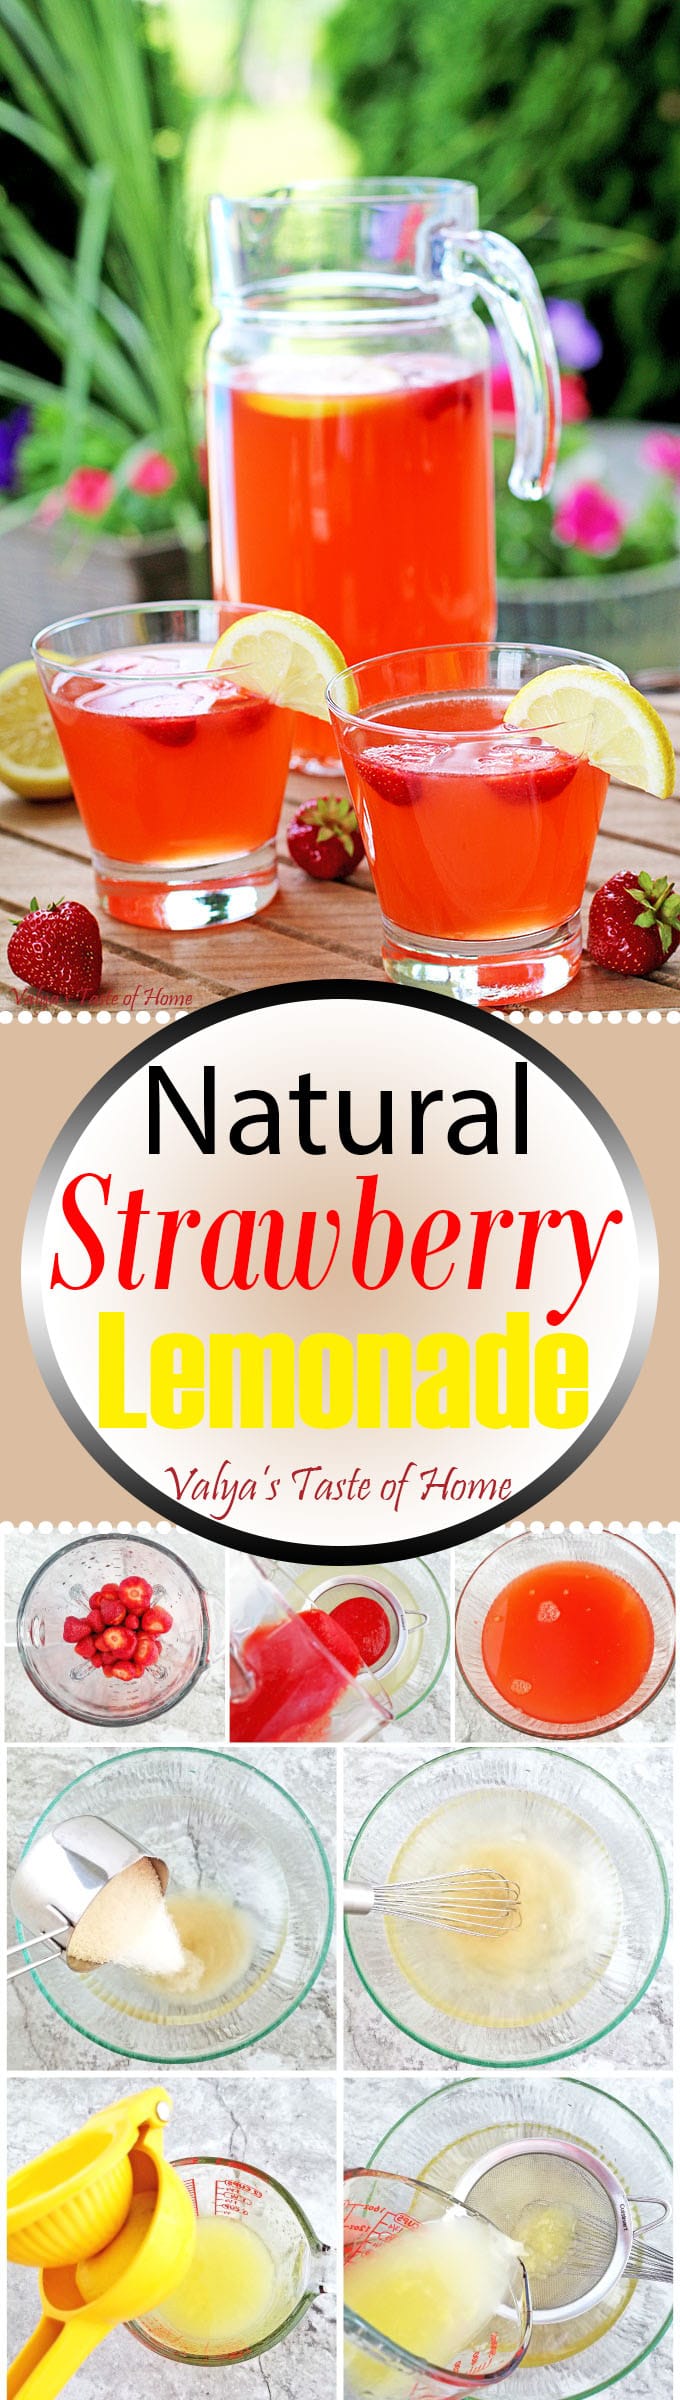 Natural Strawberry Lemonade Recipe